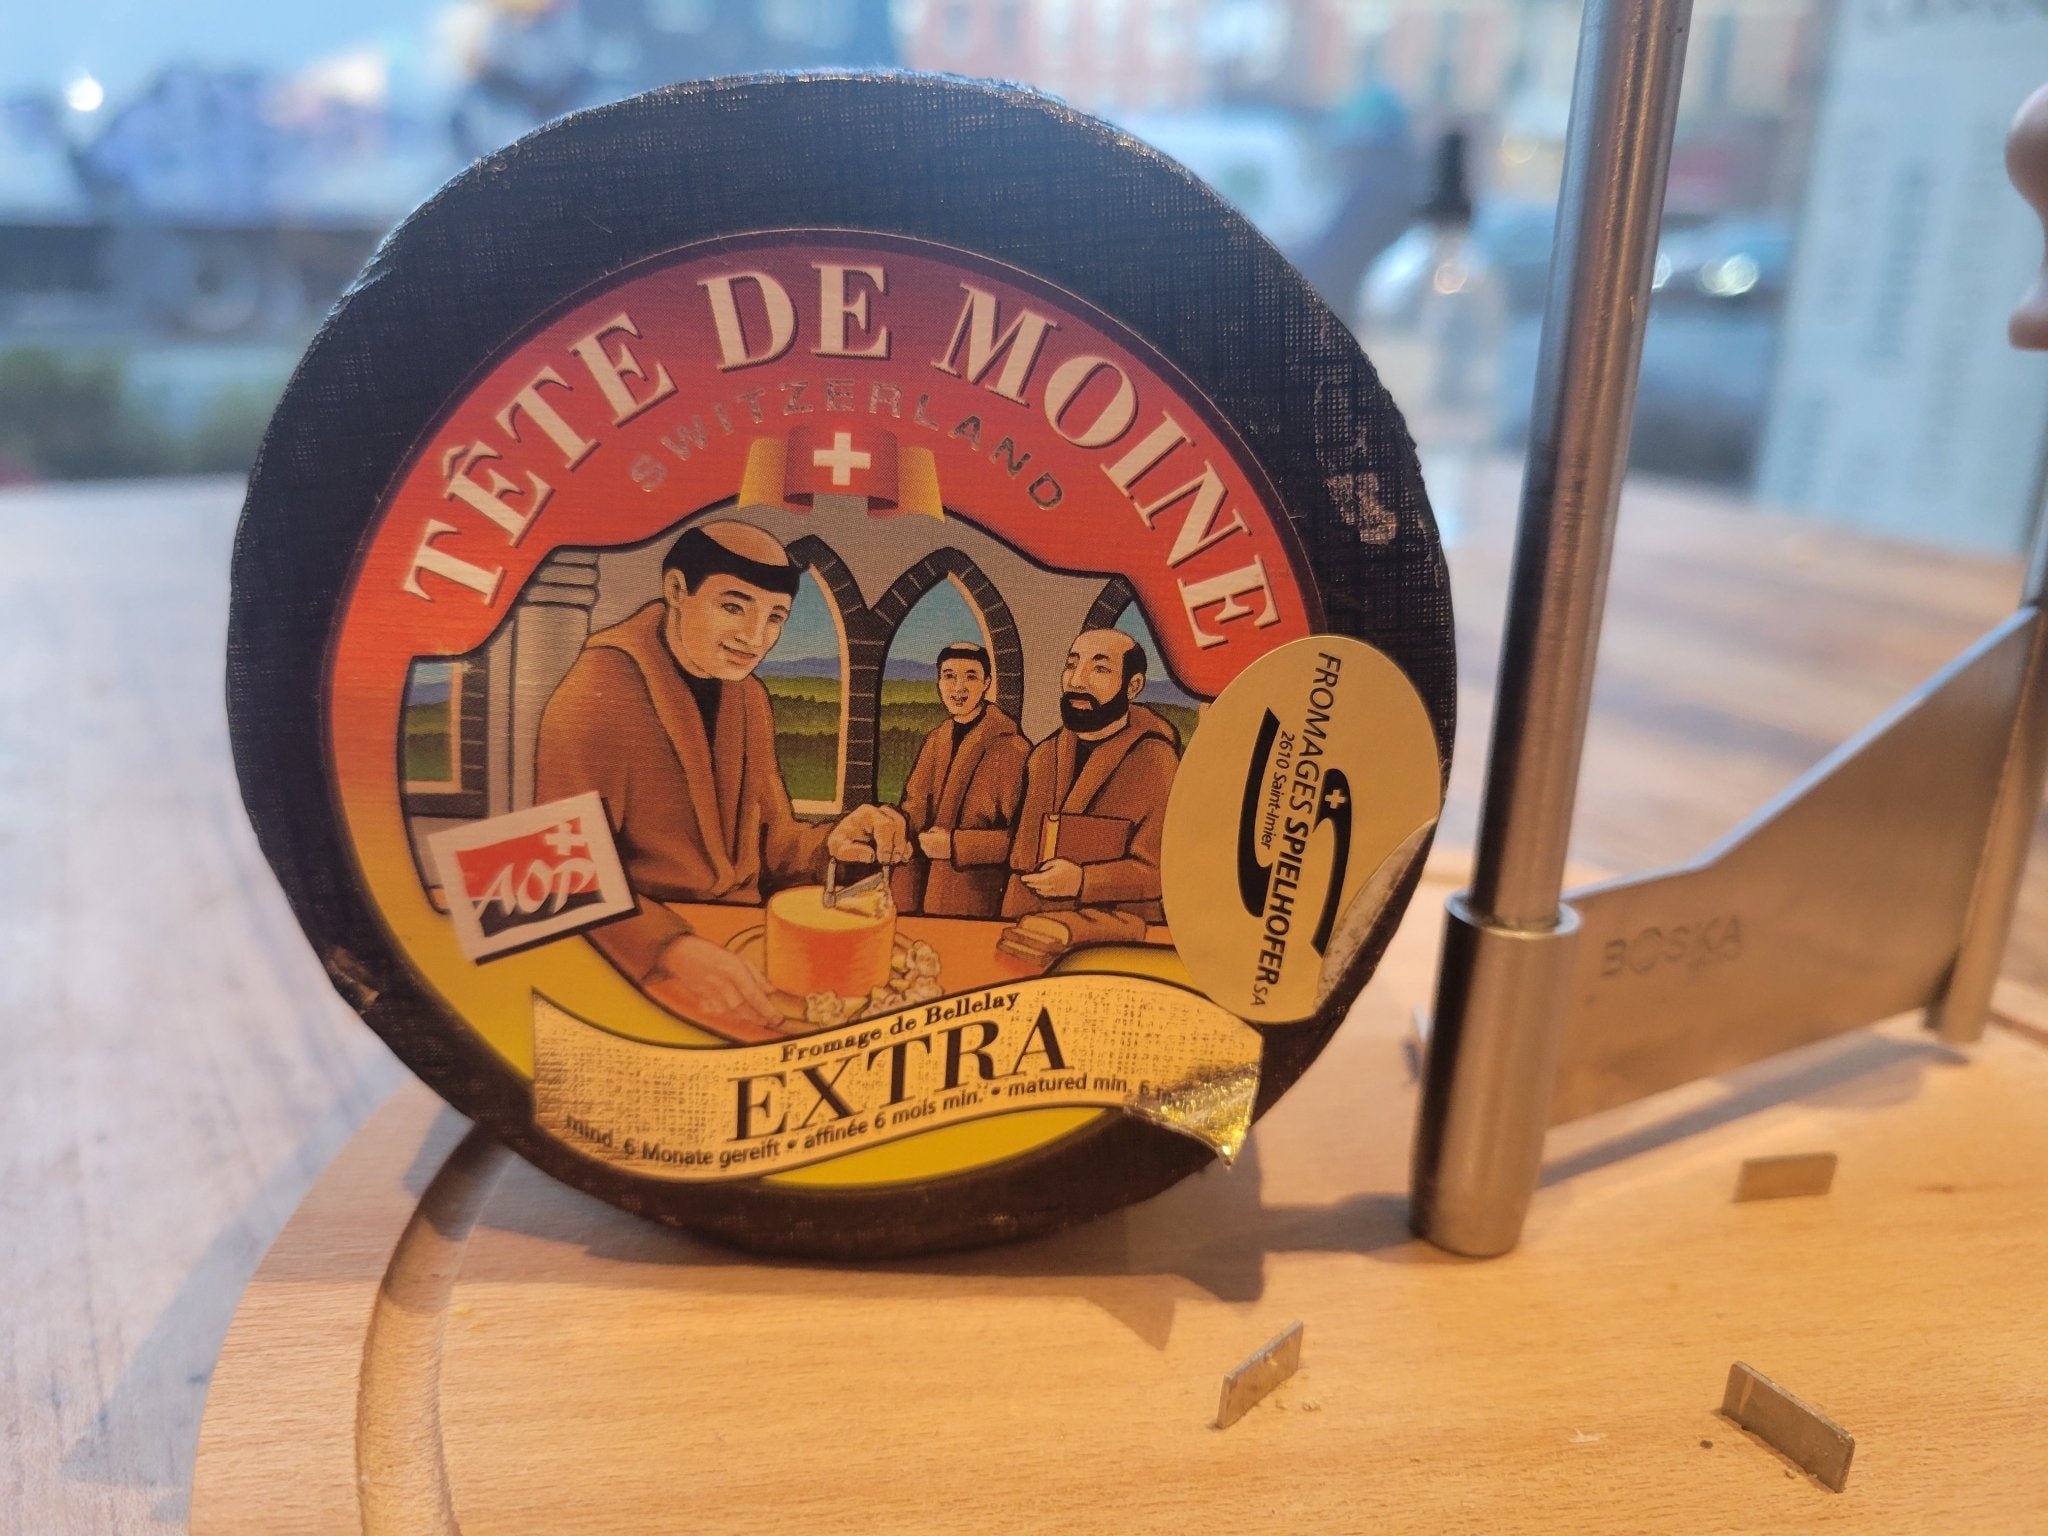 Tête de Moine Monk's Head Cheese - raw milk